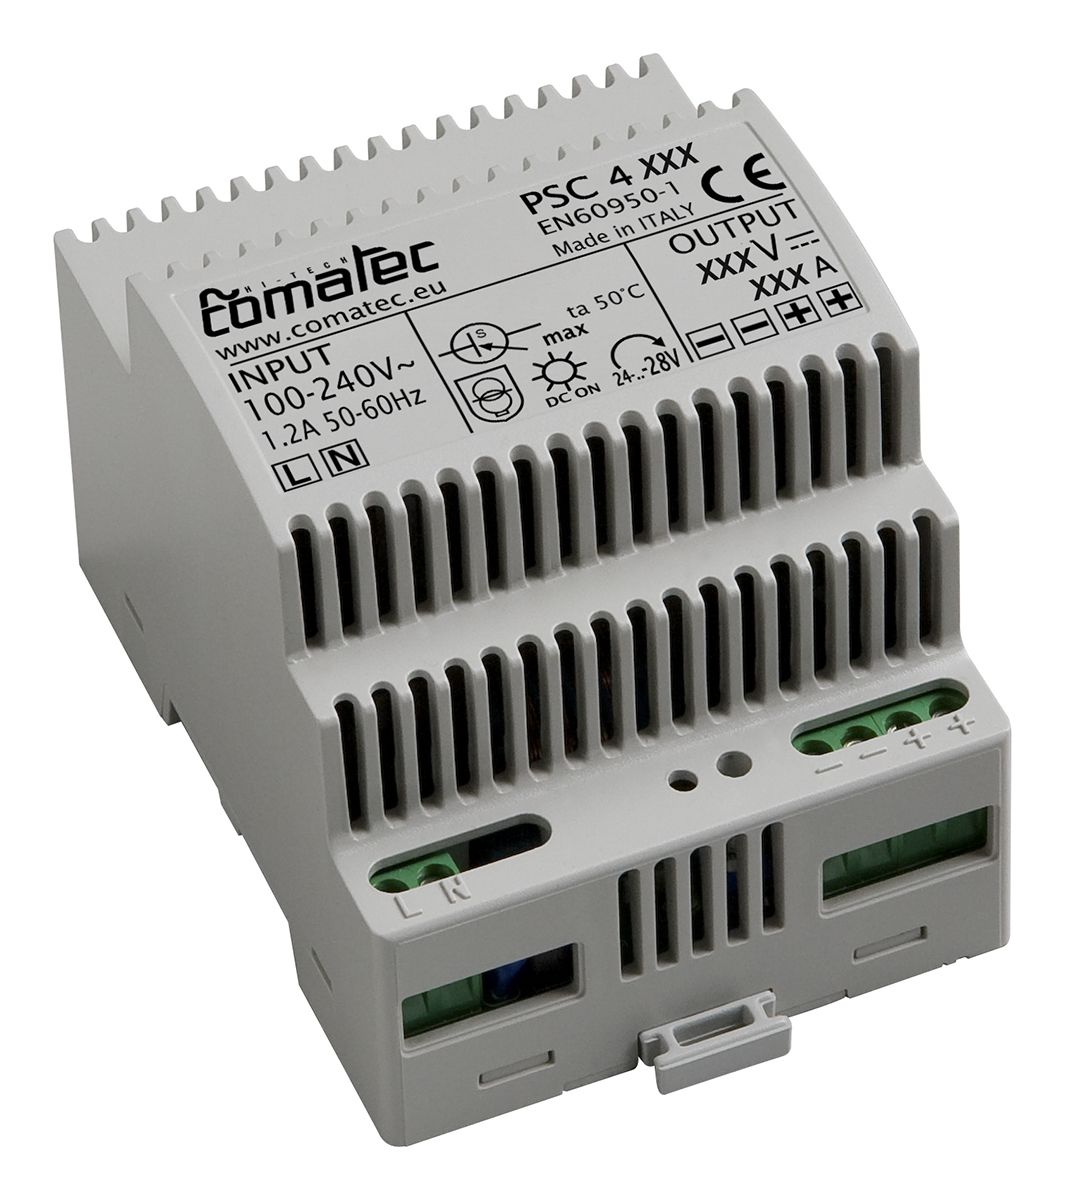 Comatec PSC DIN Rail Power Supply 230V ac Input, 12V dc Output, 5A 60W